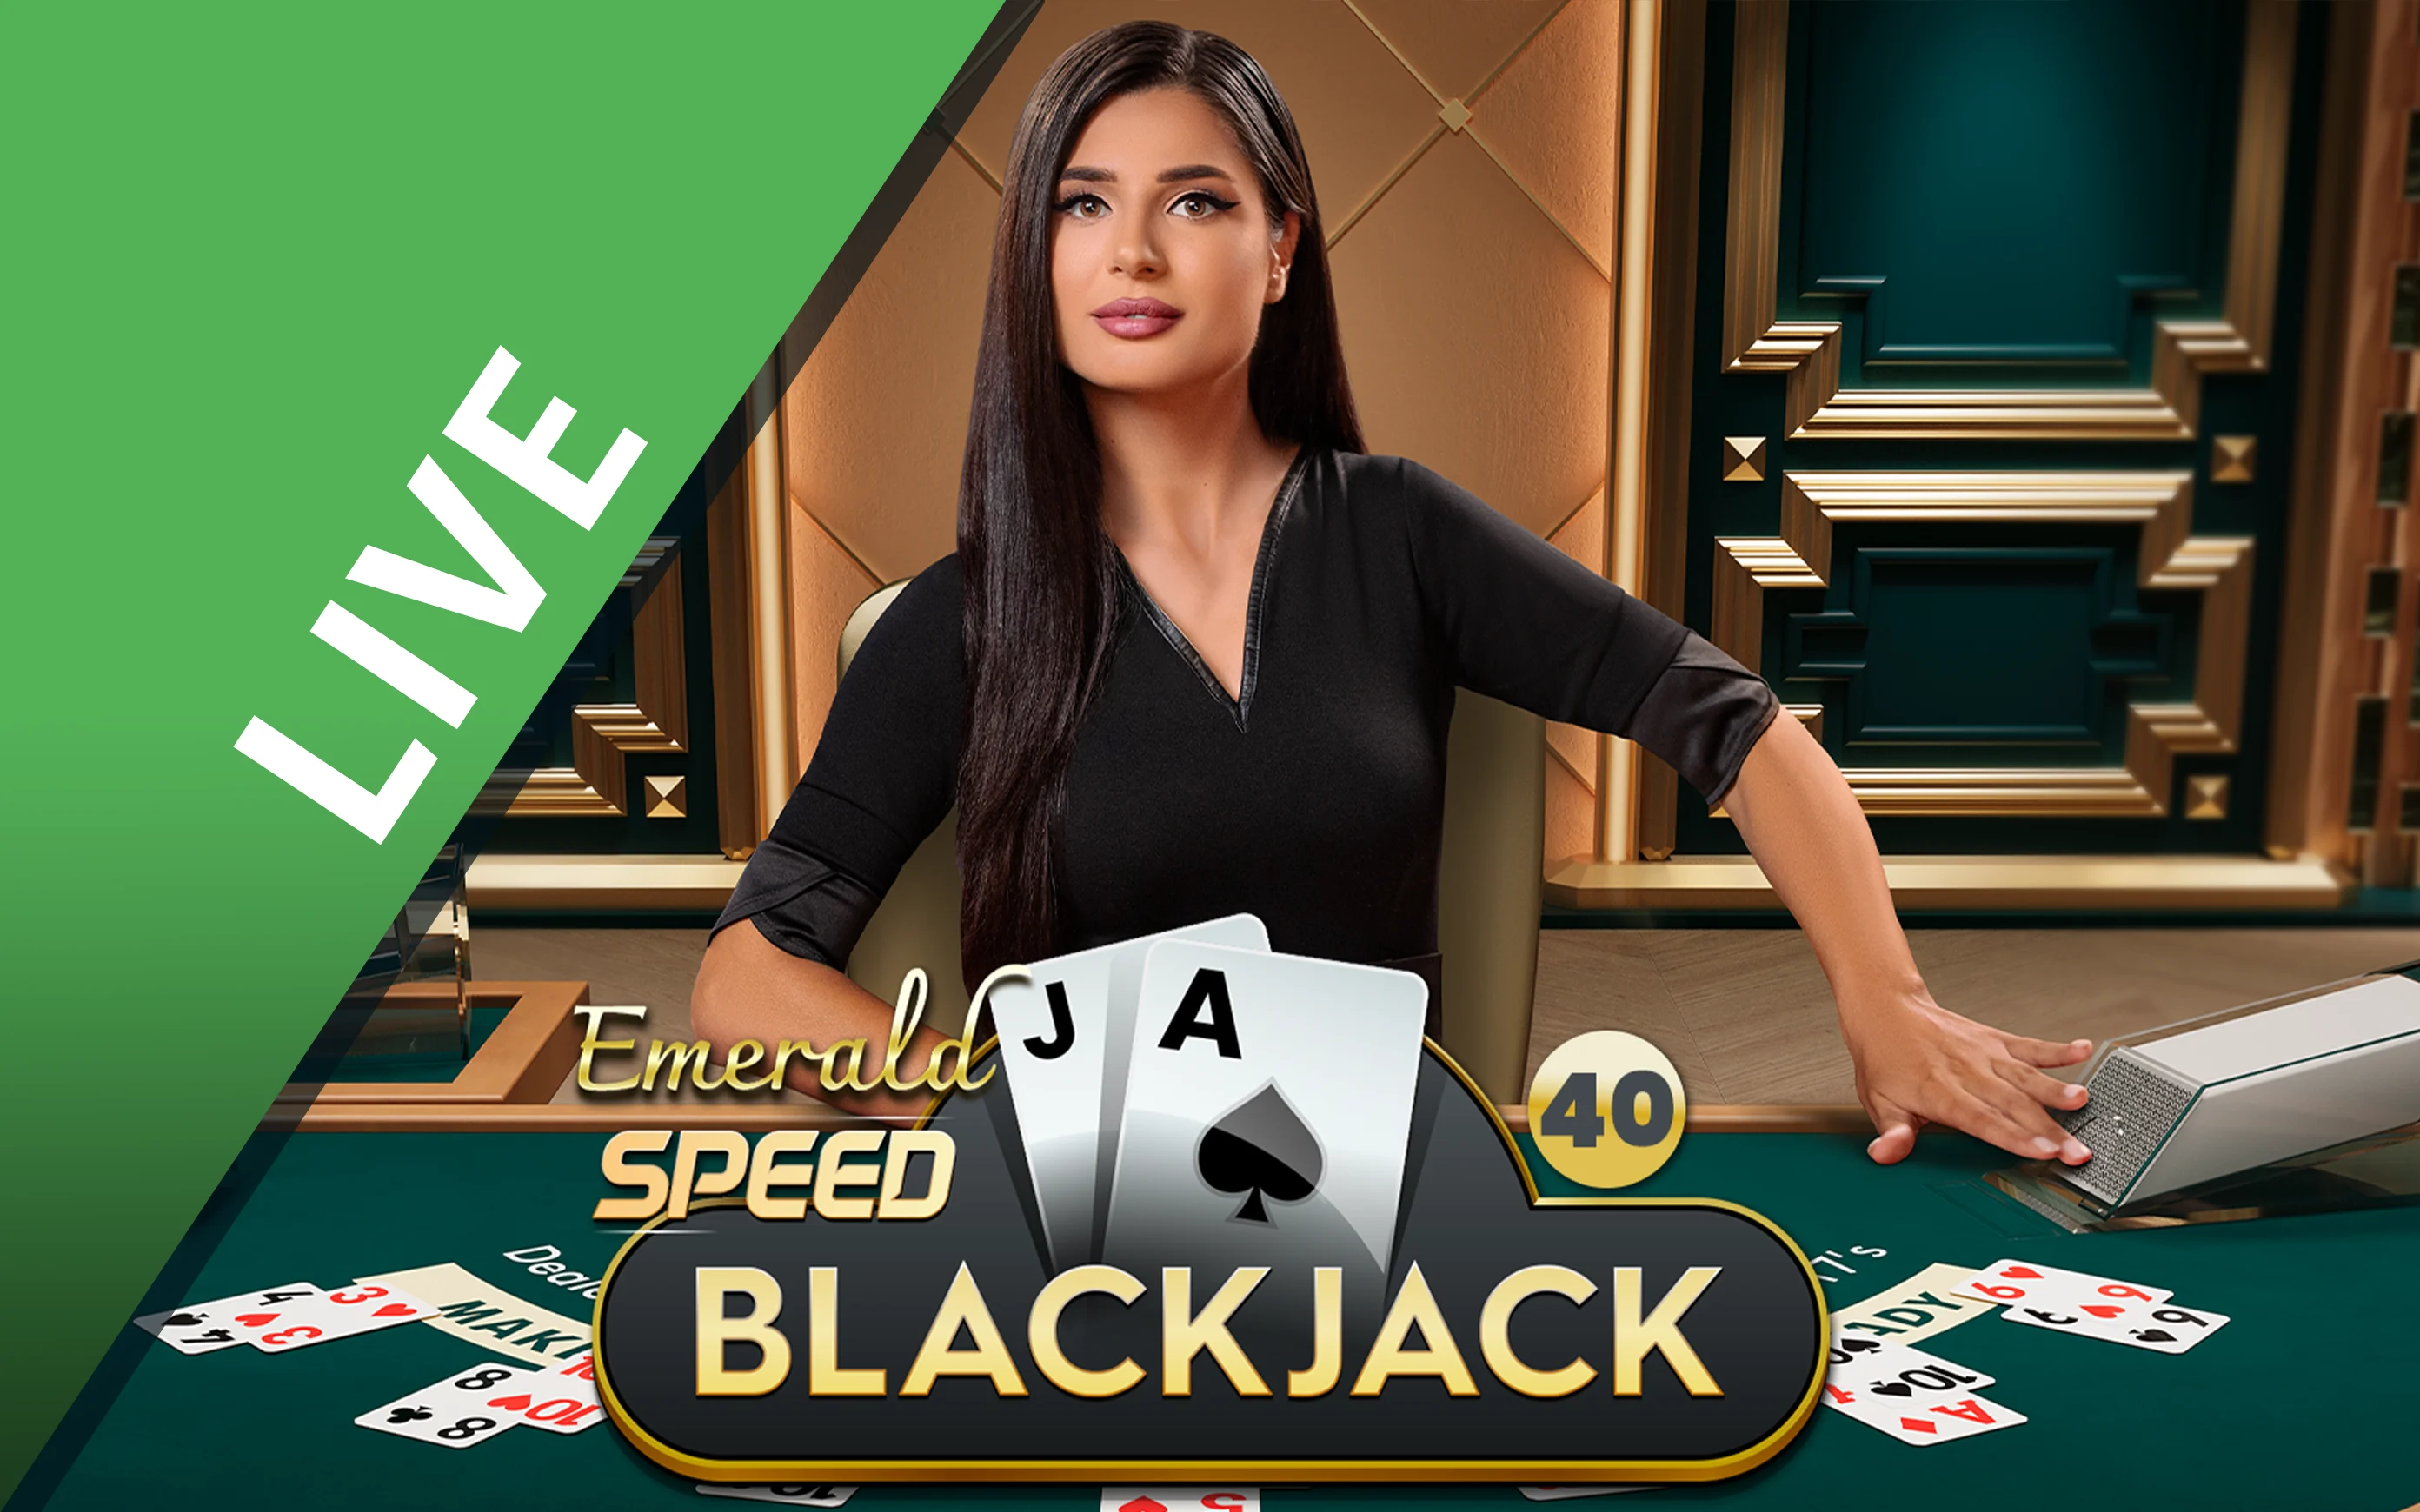 Play Speed Blackjack 40 - Emerald on Starcasino.be online casino